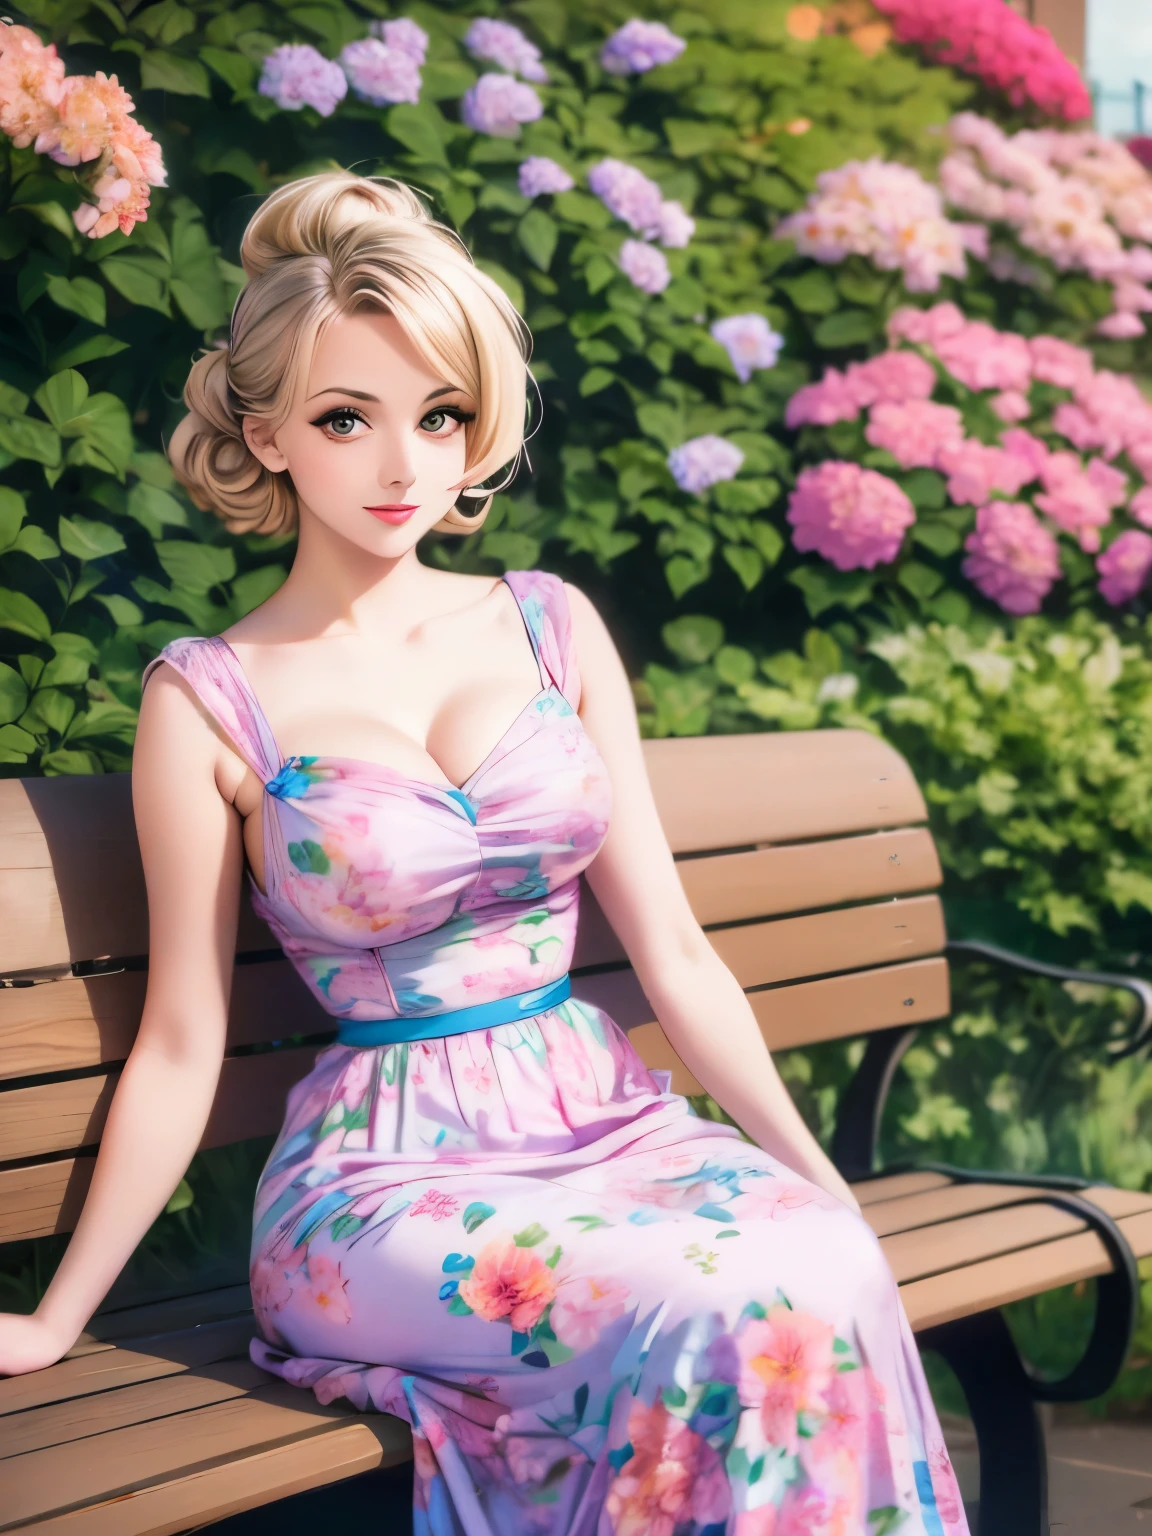 arafed woman ในชุด sitting on a bench in a garden, 1 9 สไตล์ 50ส, สไตล์ยุค 50, สไตล์ 50ส, dressed in a ชุดดอกไม้, สวมชุดลายดอกสีชมพู, ชุดดอกไม้, สวมชุดที่สวยงาม, ในชุด, สวมชุดยาวลายดอกไม้, retro สไตล์ 50ส, นึกถึงปี 1950